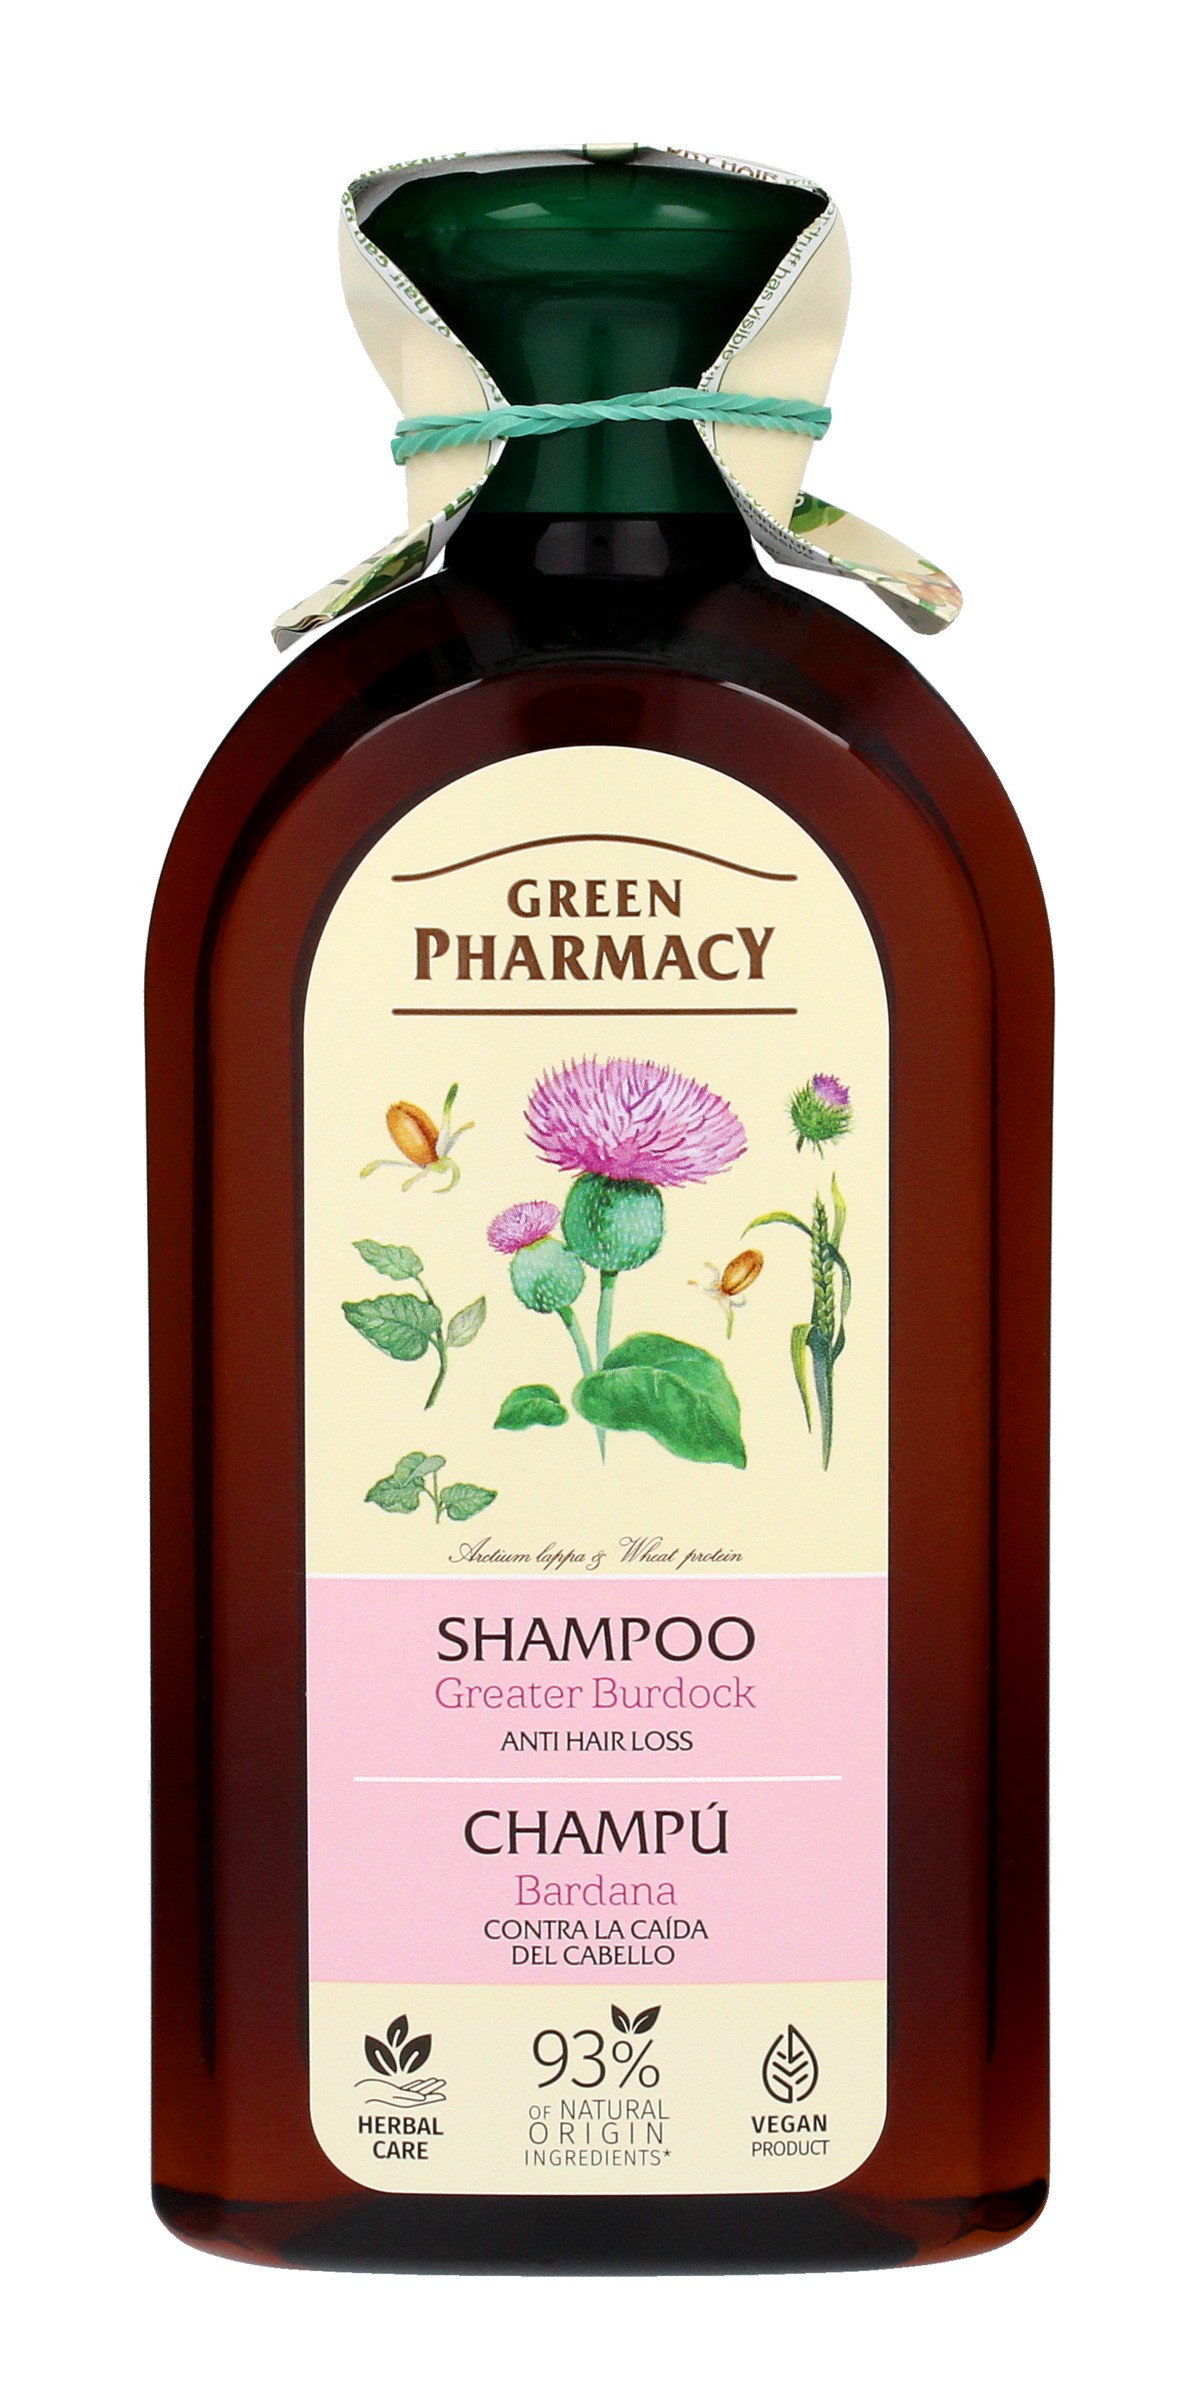 green pharmacy szampon łopian